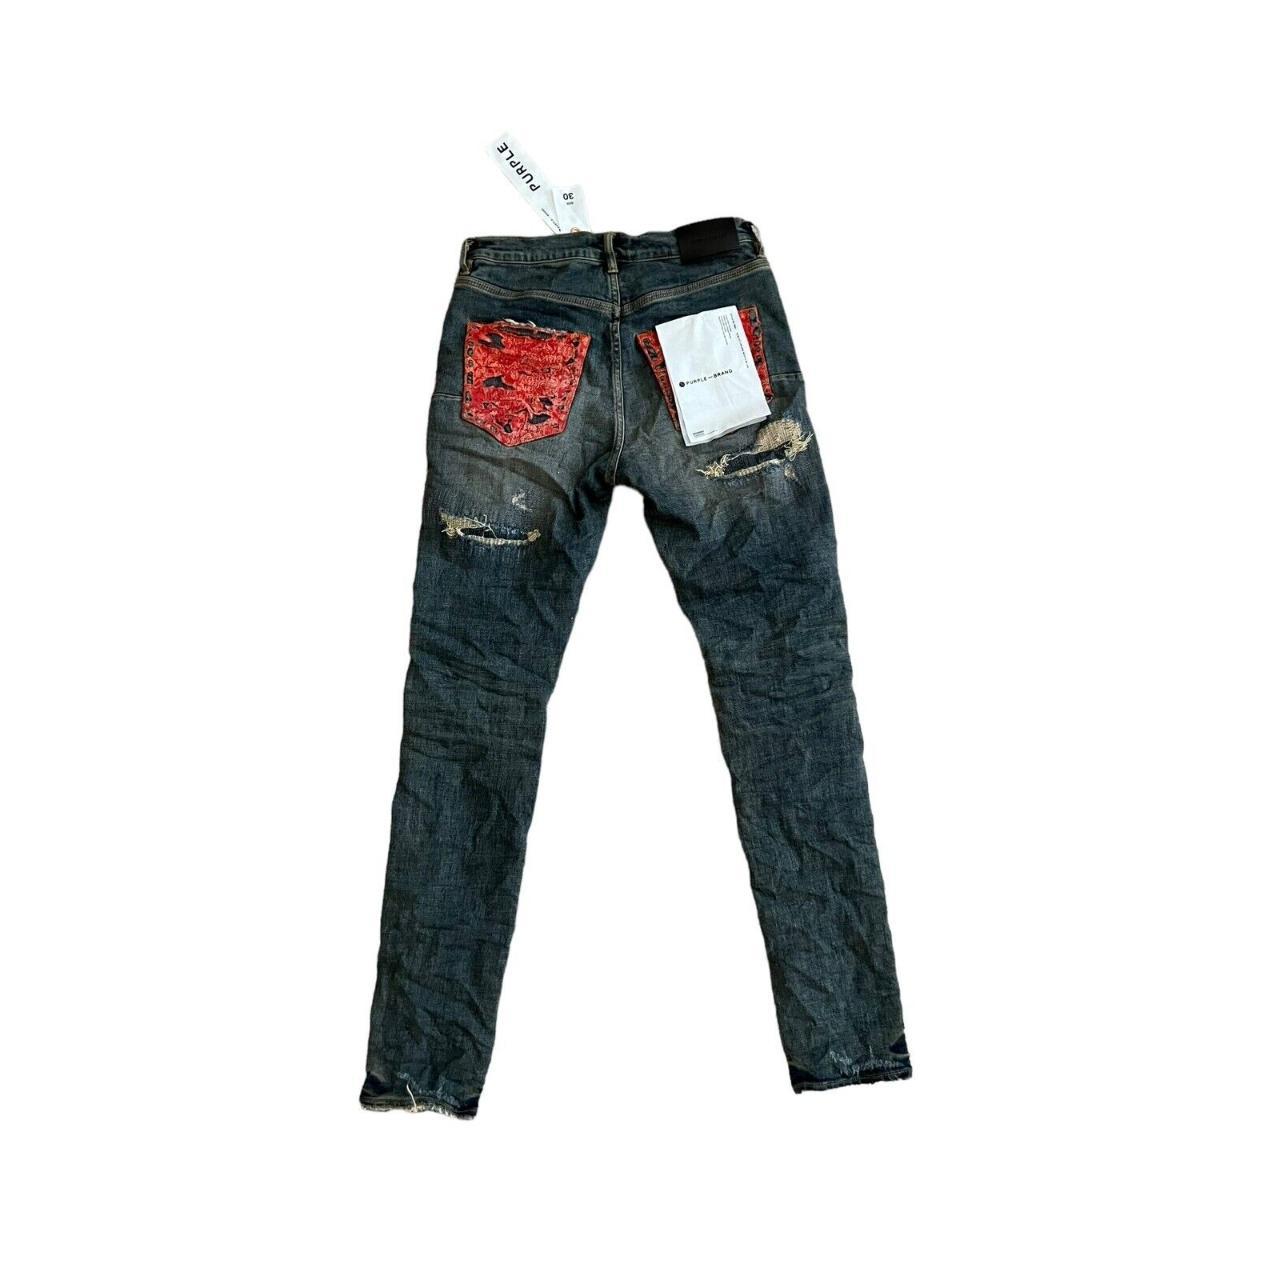 Brand new - “Purple” Brand Jeans size 30 - Depop